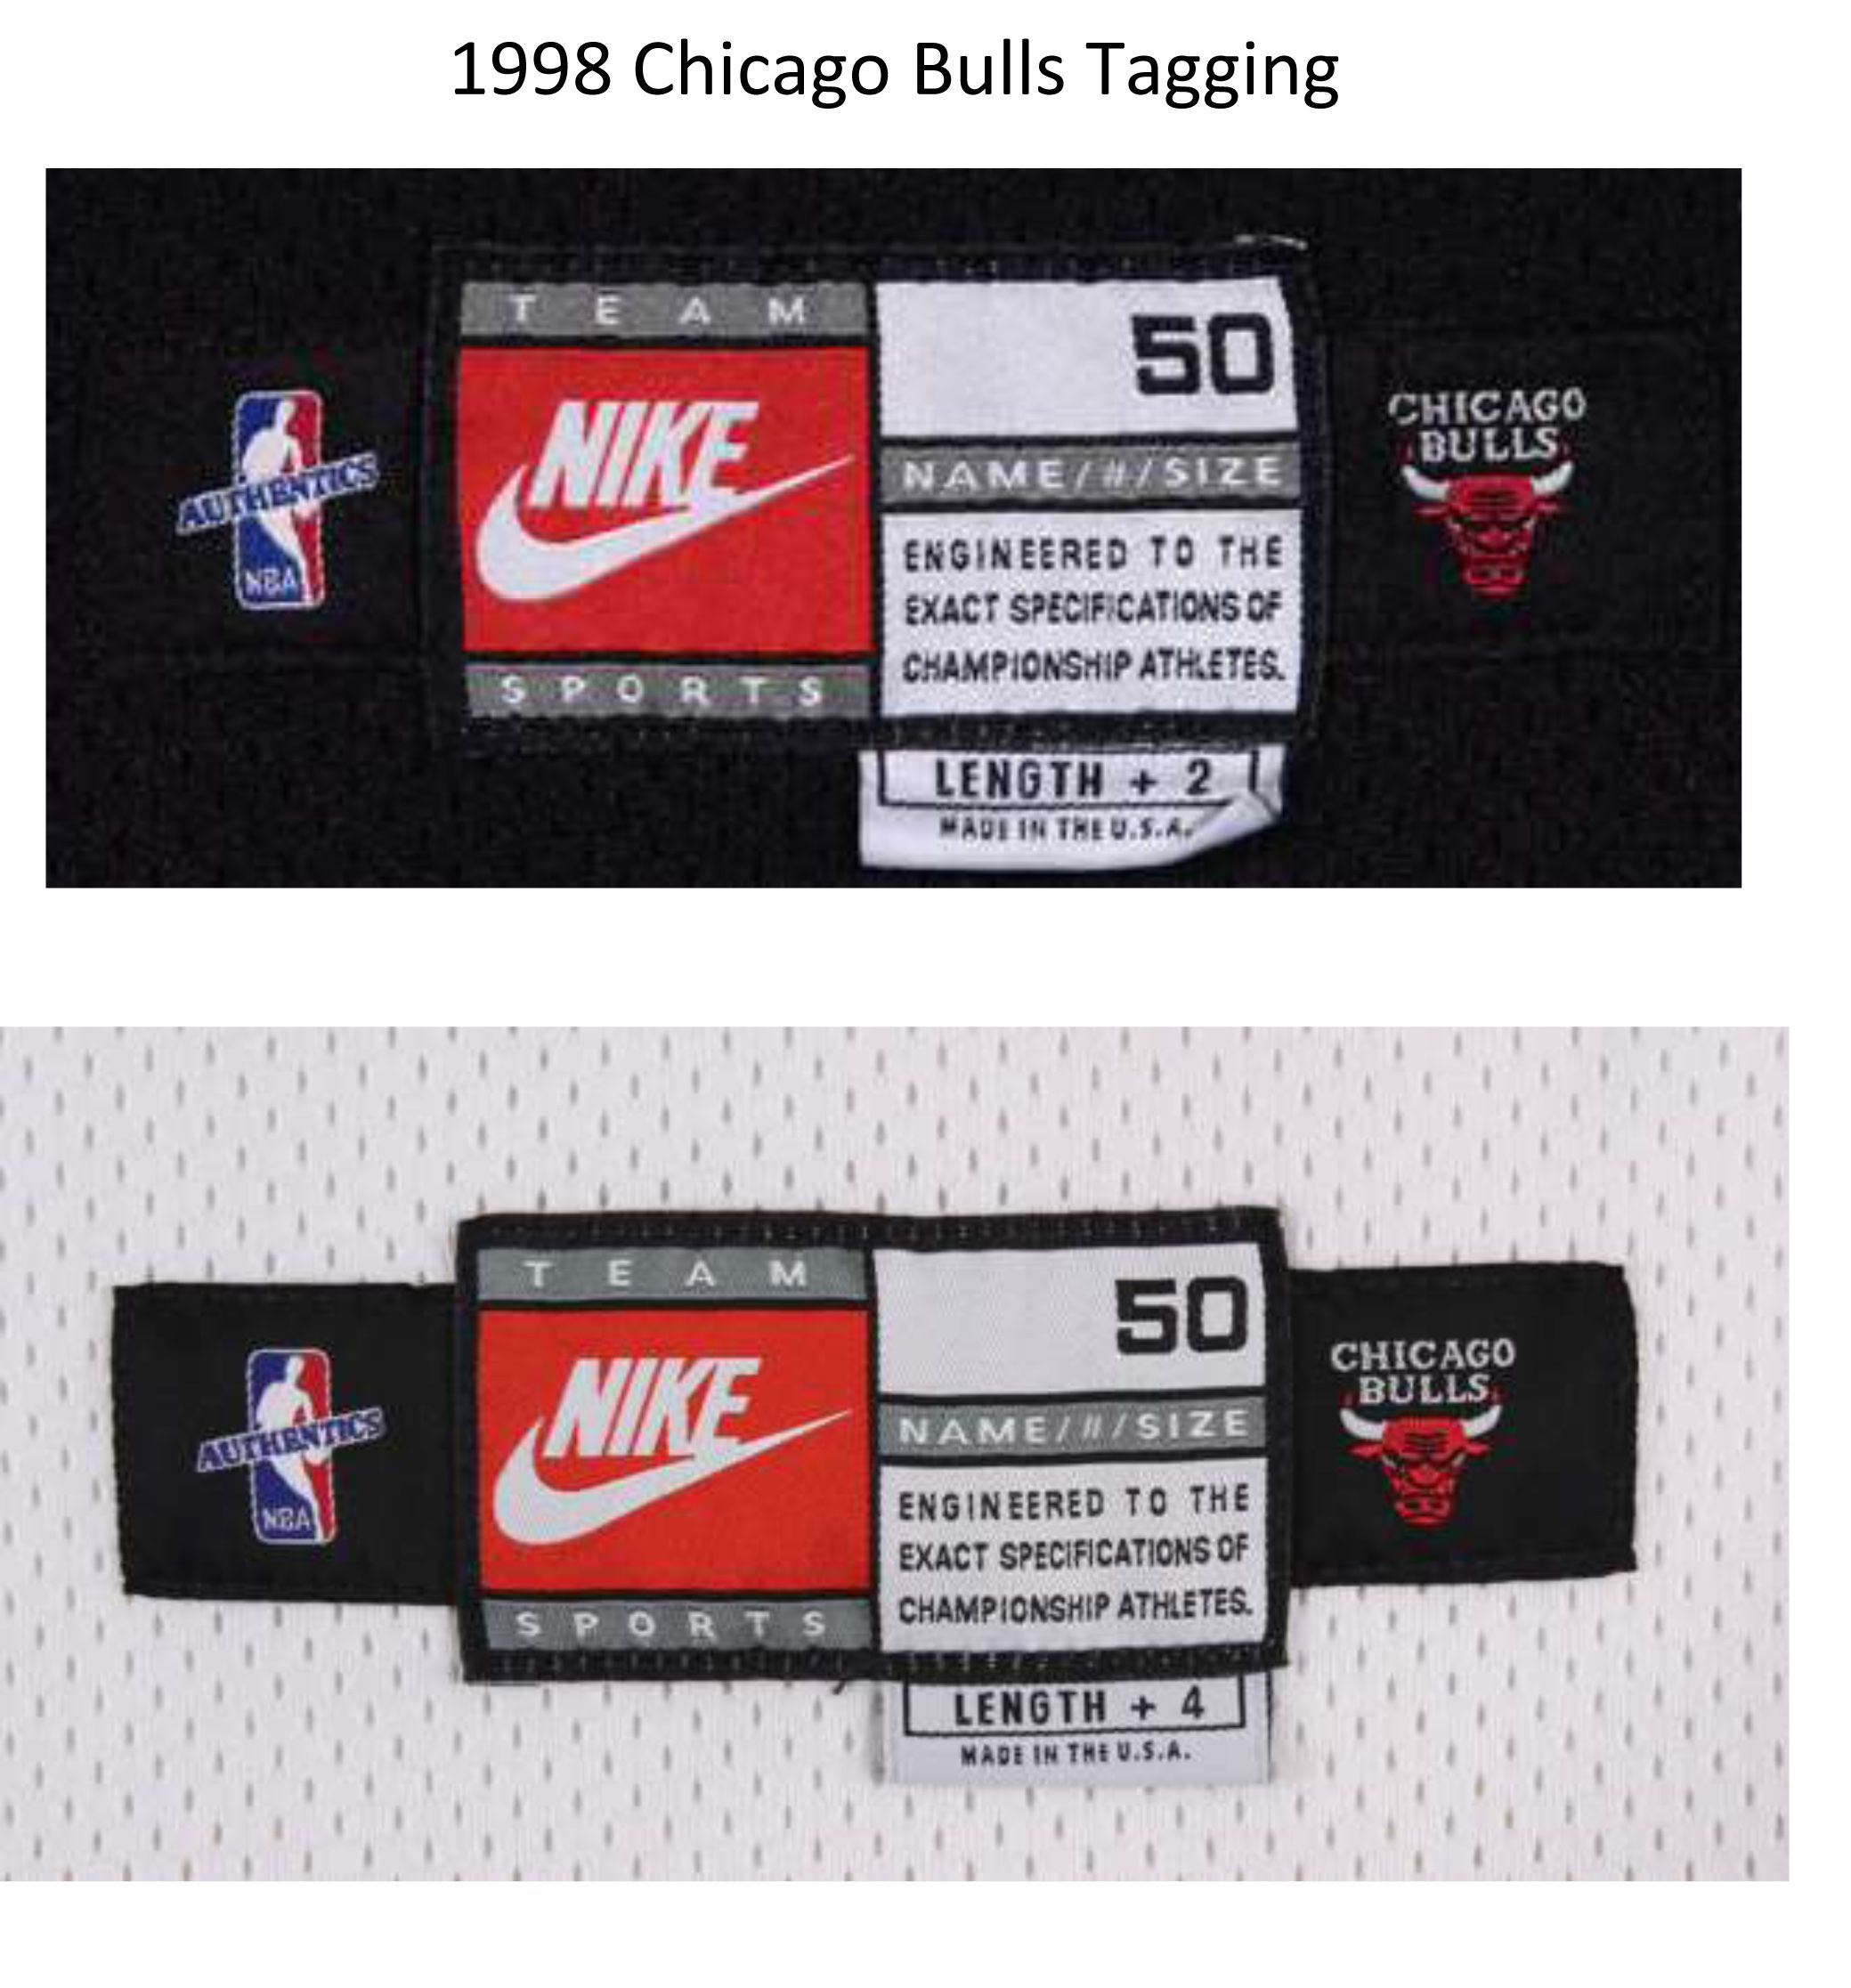 Michael Jordan Game-Used Bulls Jersey (MEARS LOA) (See Description